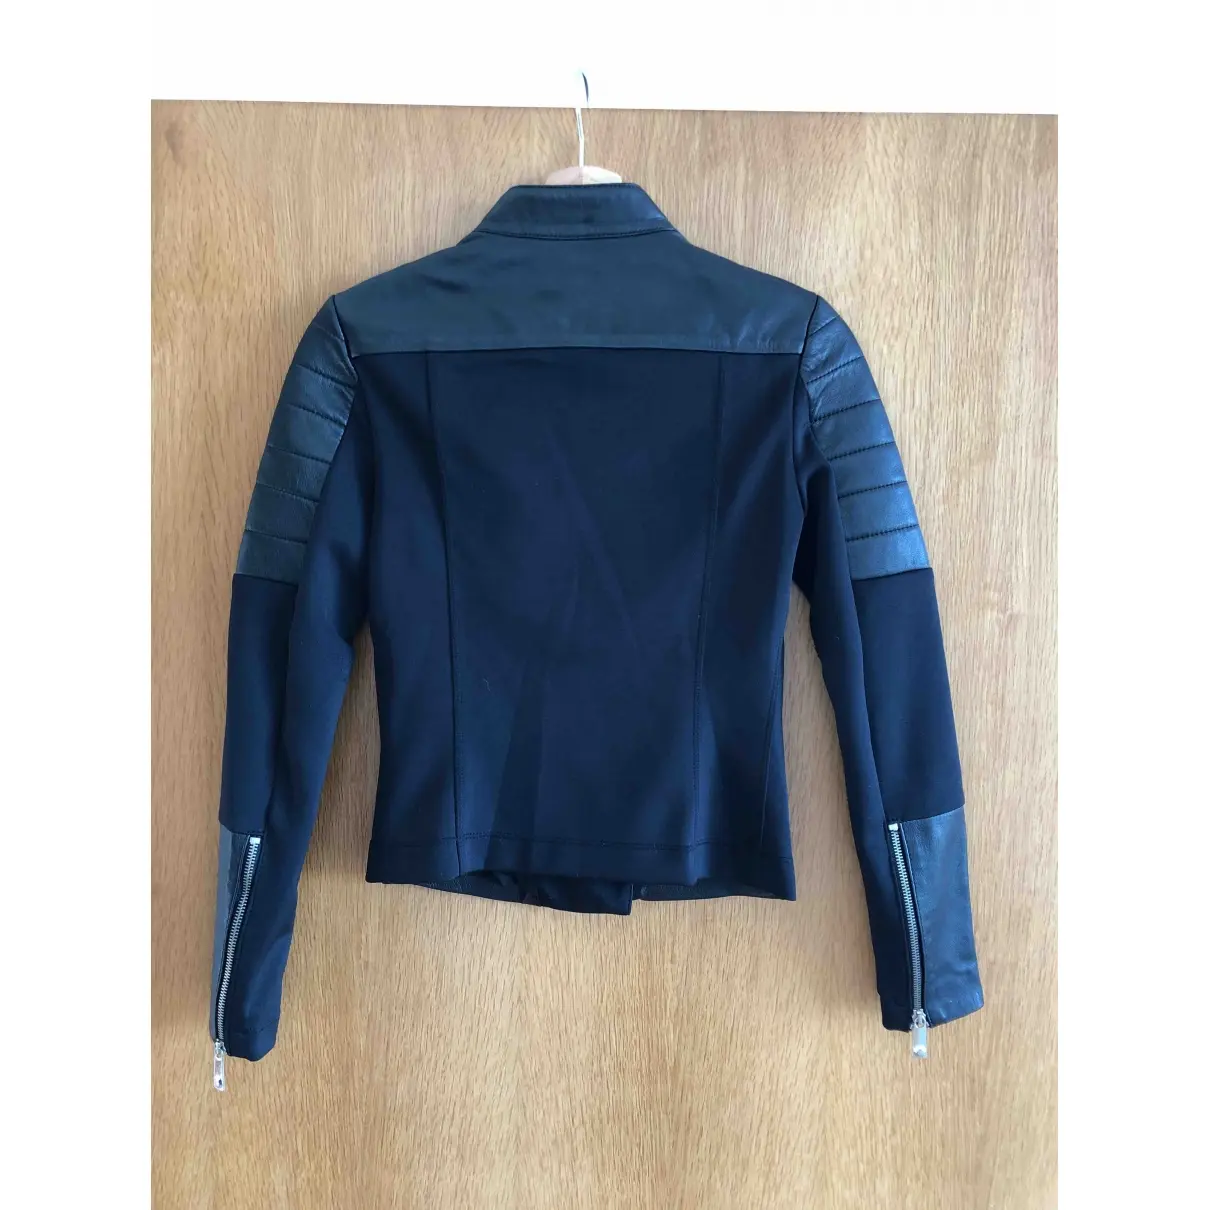 Buy Pinko Leather coat online